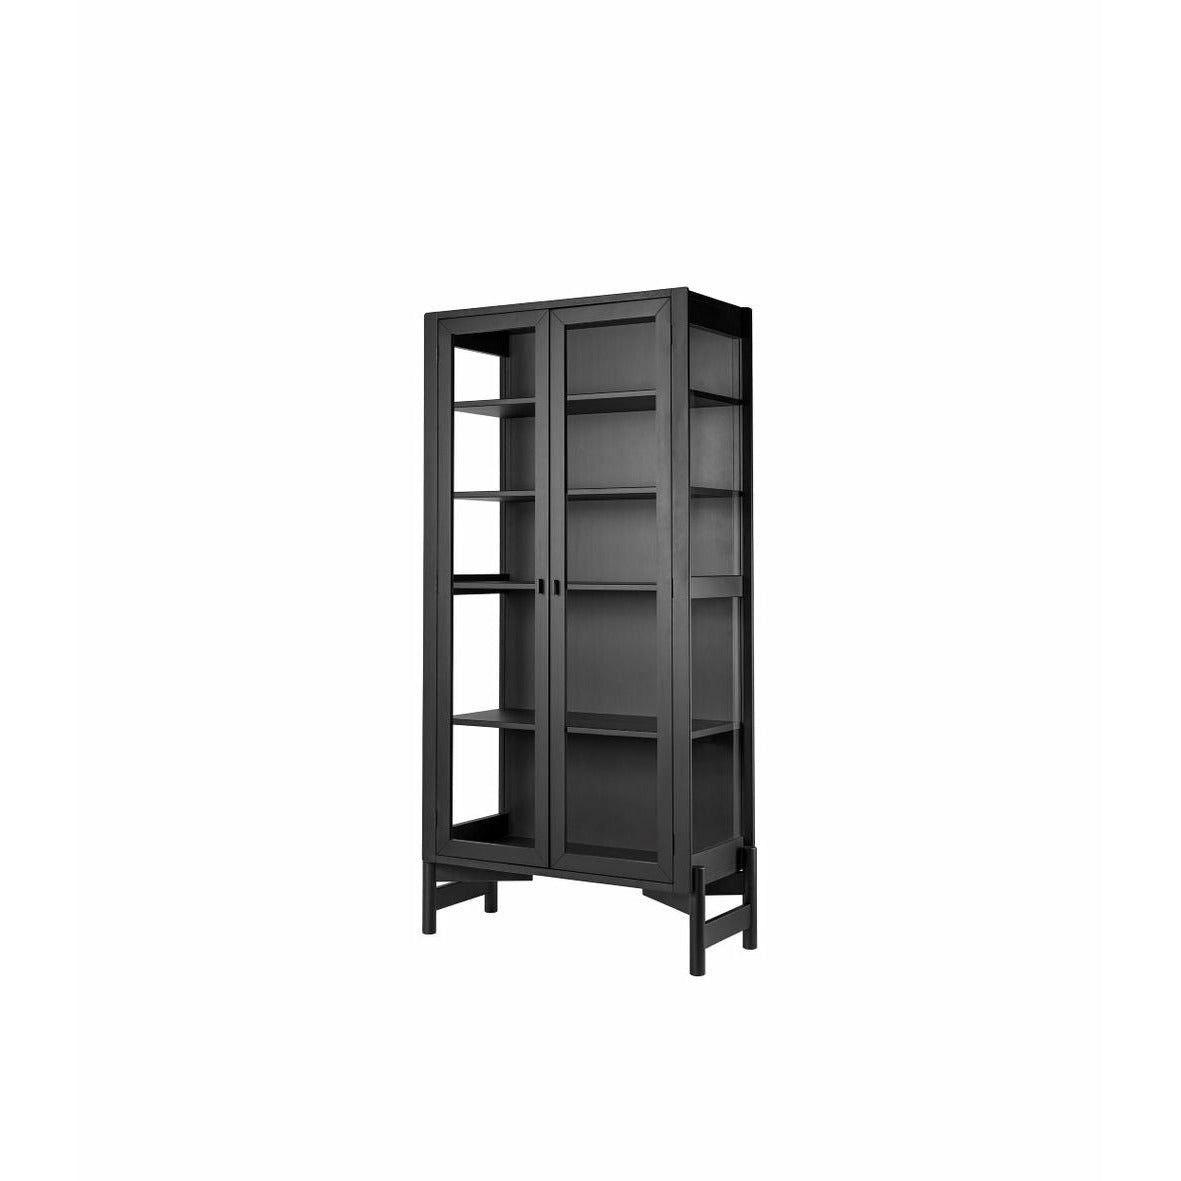 Fdb Møbler A90 Cabinet d'affichage Bodenne Beech Black LaQuered, H: 178 cm